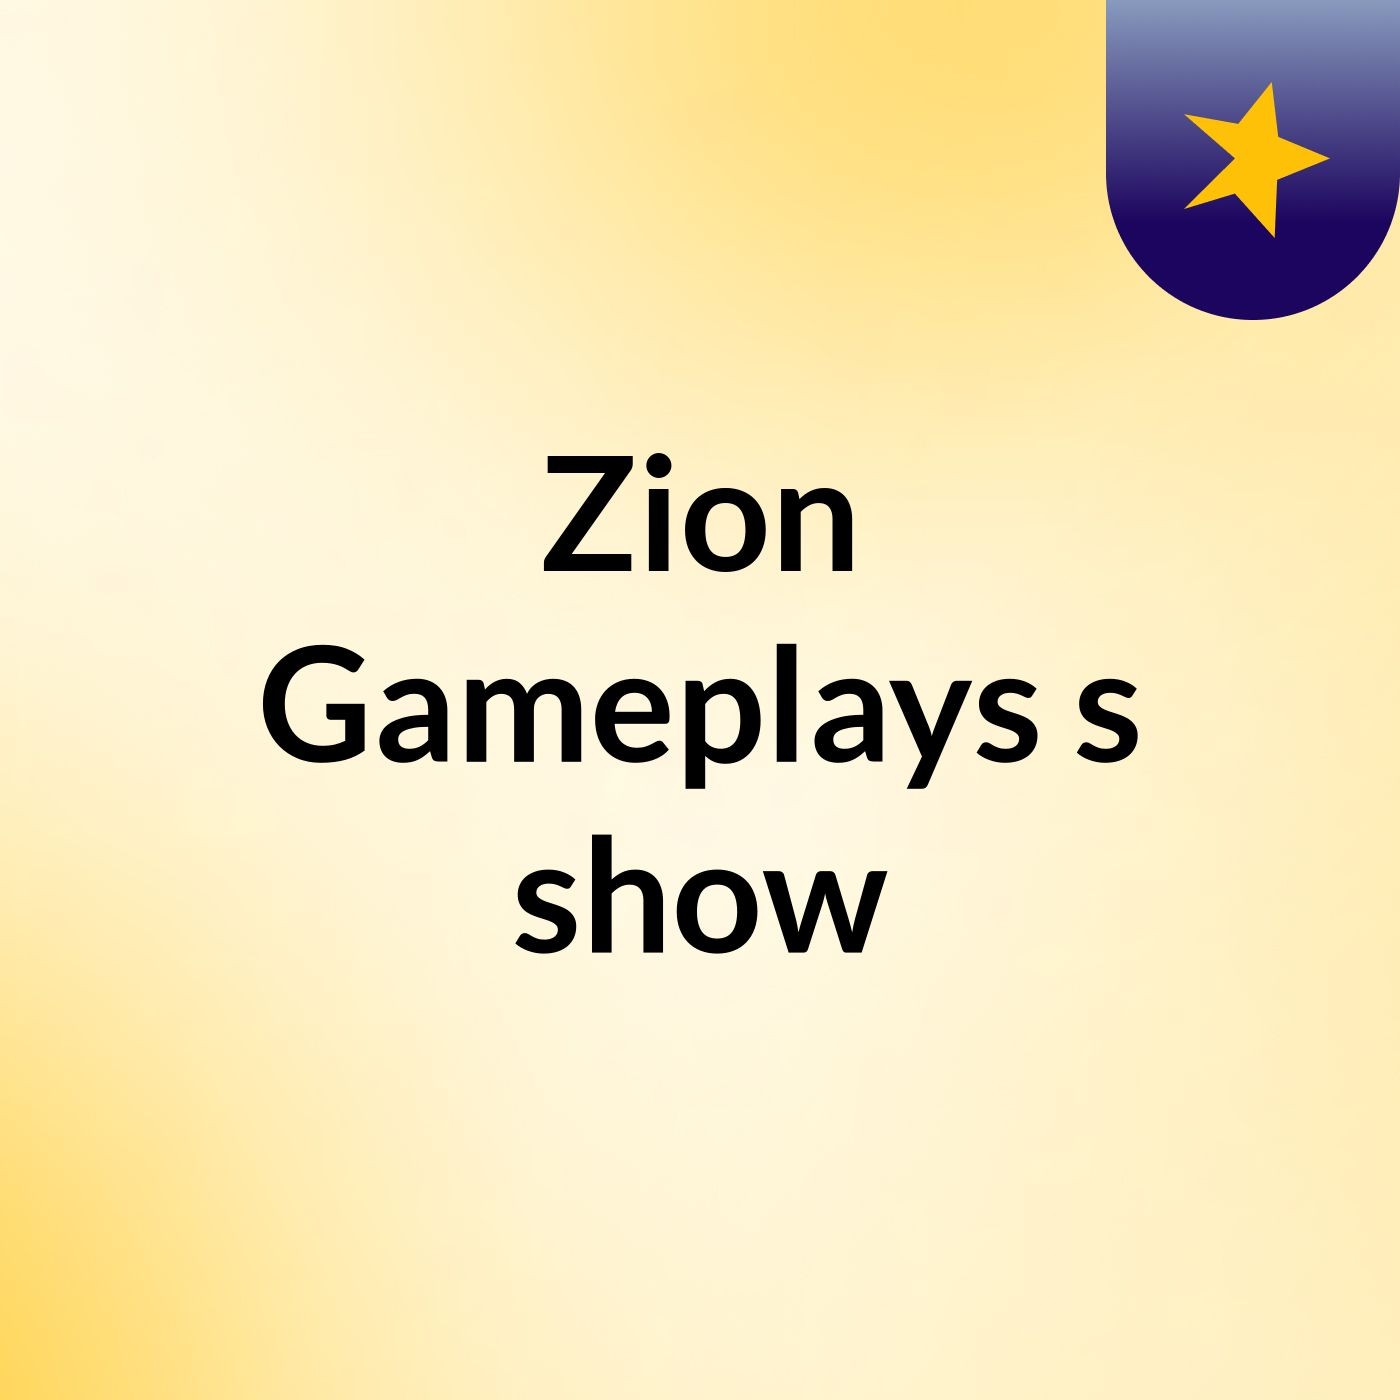 Zion Gameplays's show